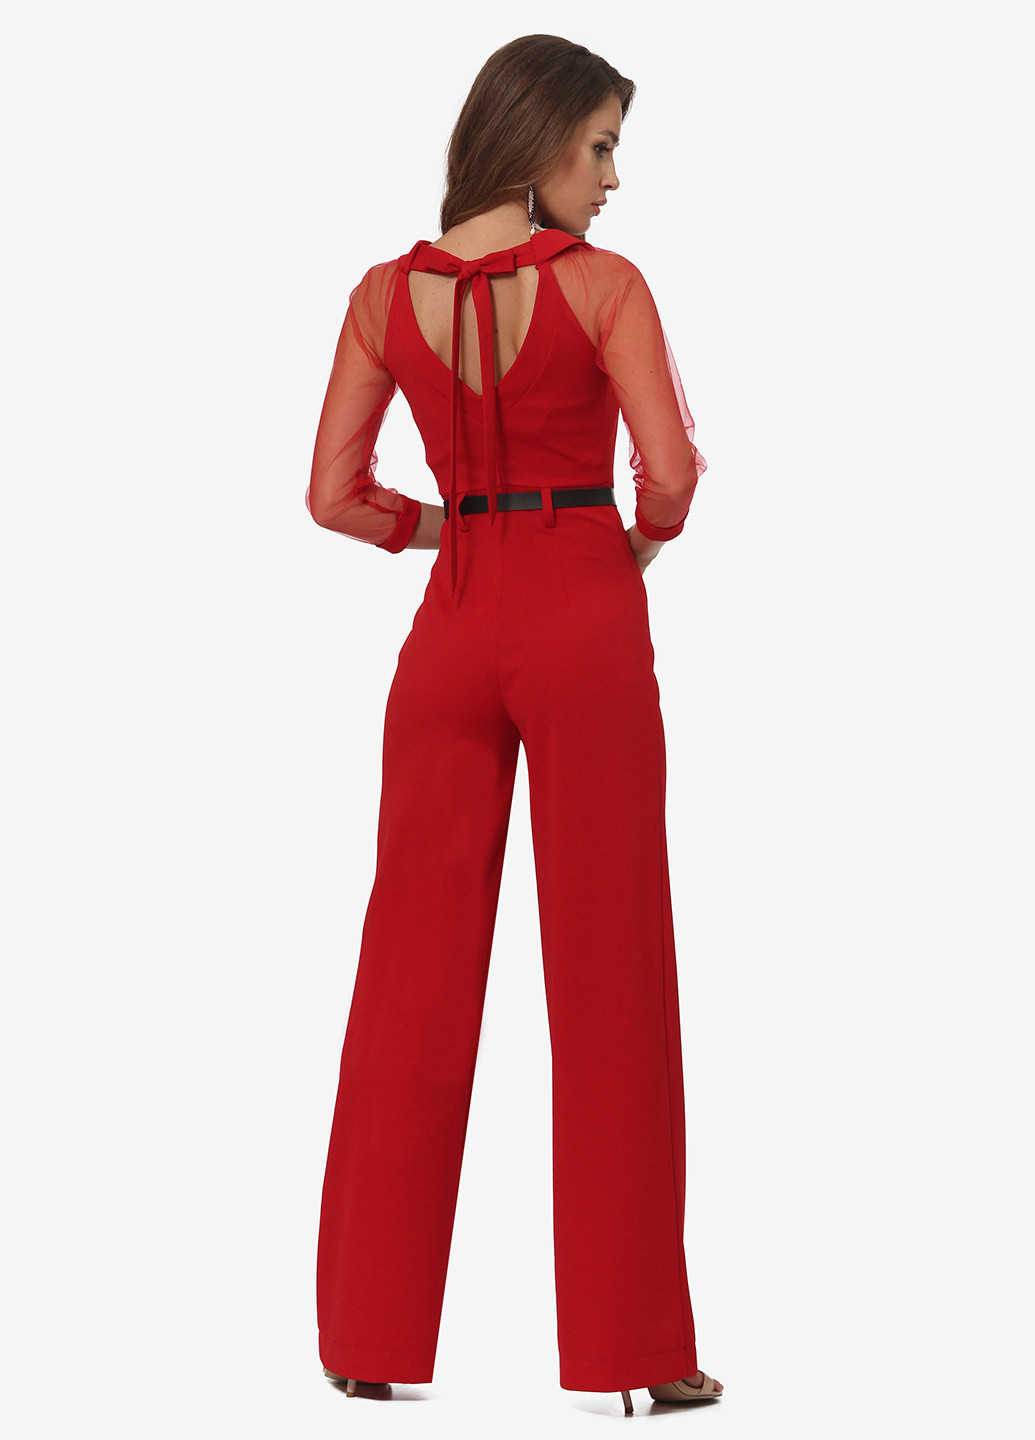 Комбинезон Lila Kass комбинезон-брюки однотонный красный кэжуал полиэстер, трикотаж, фатин